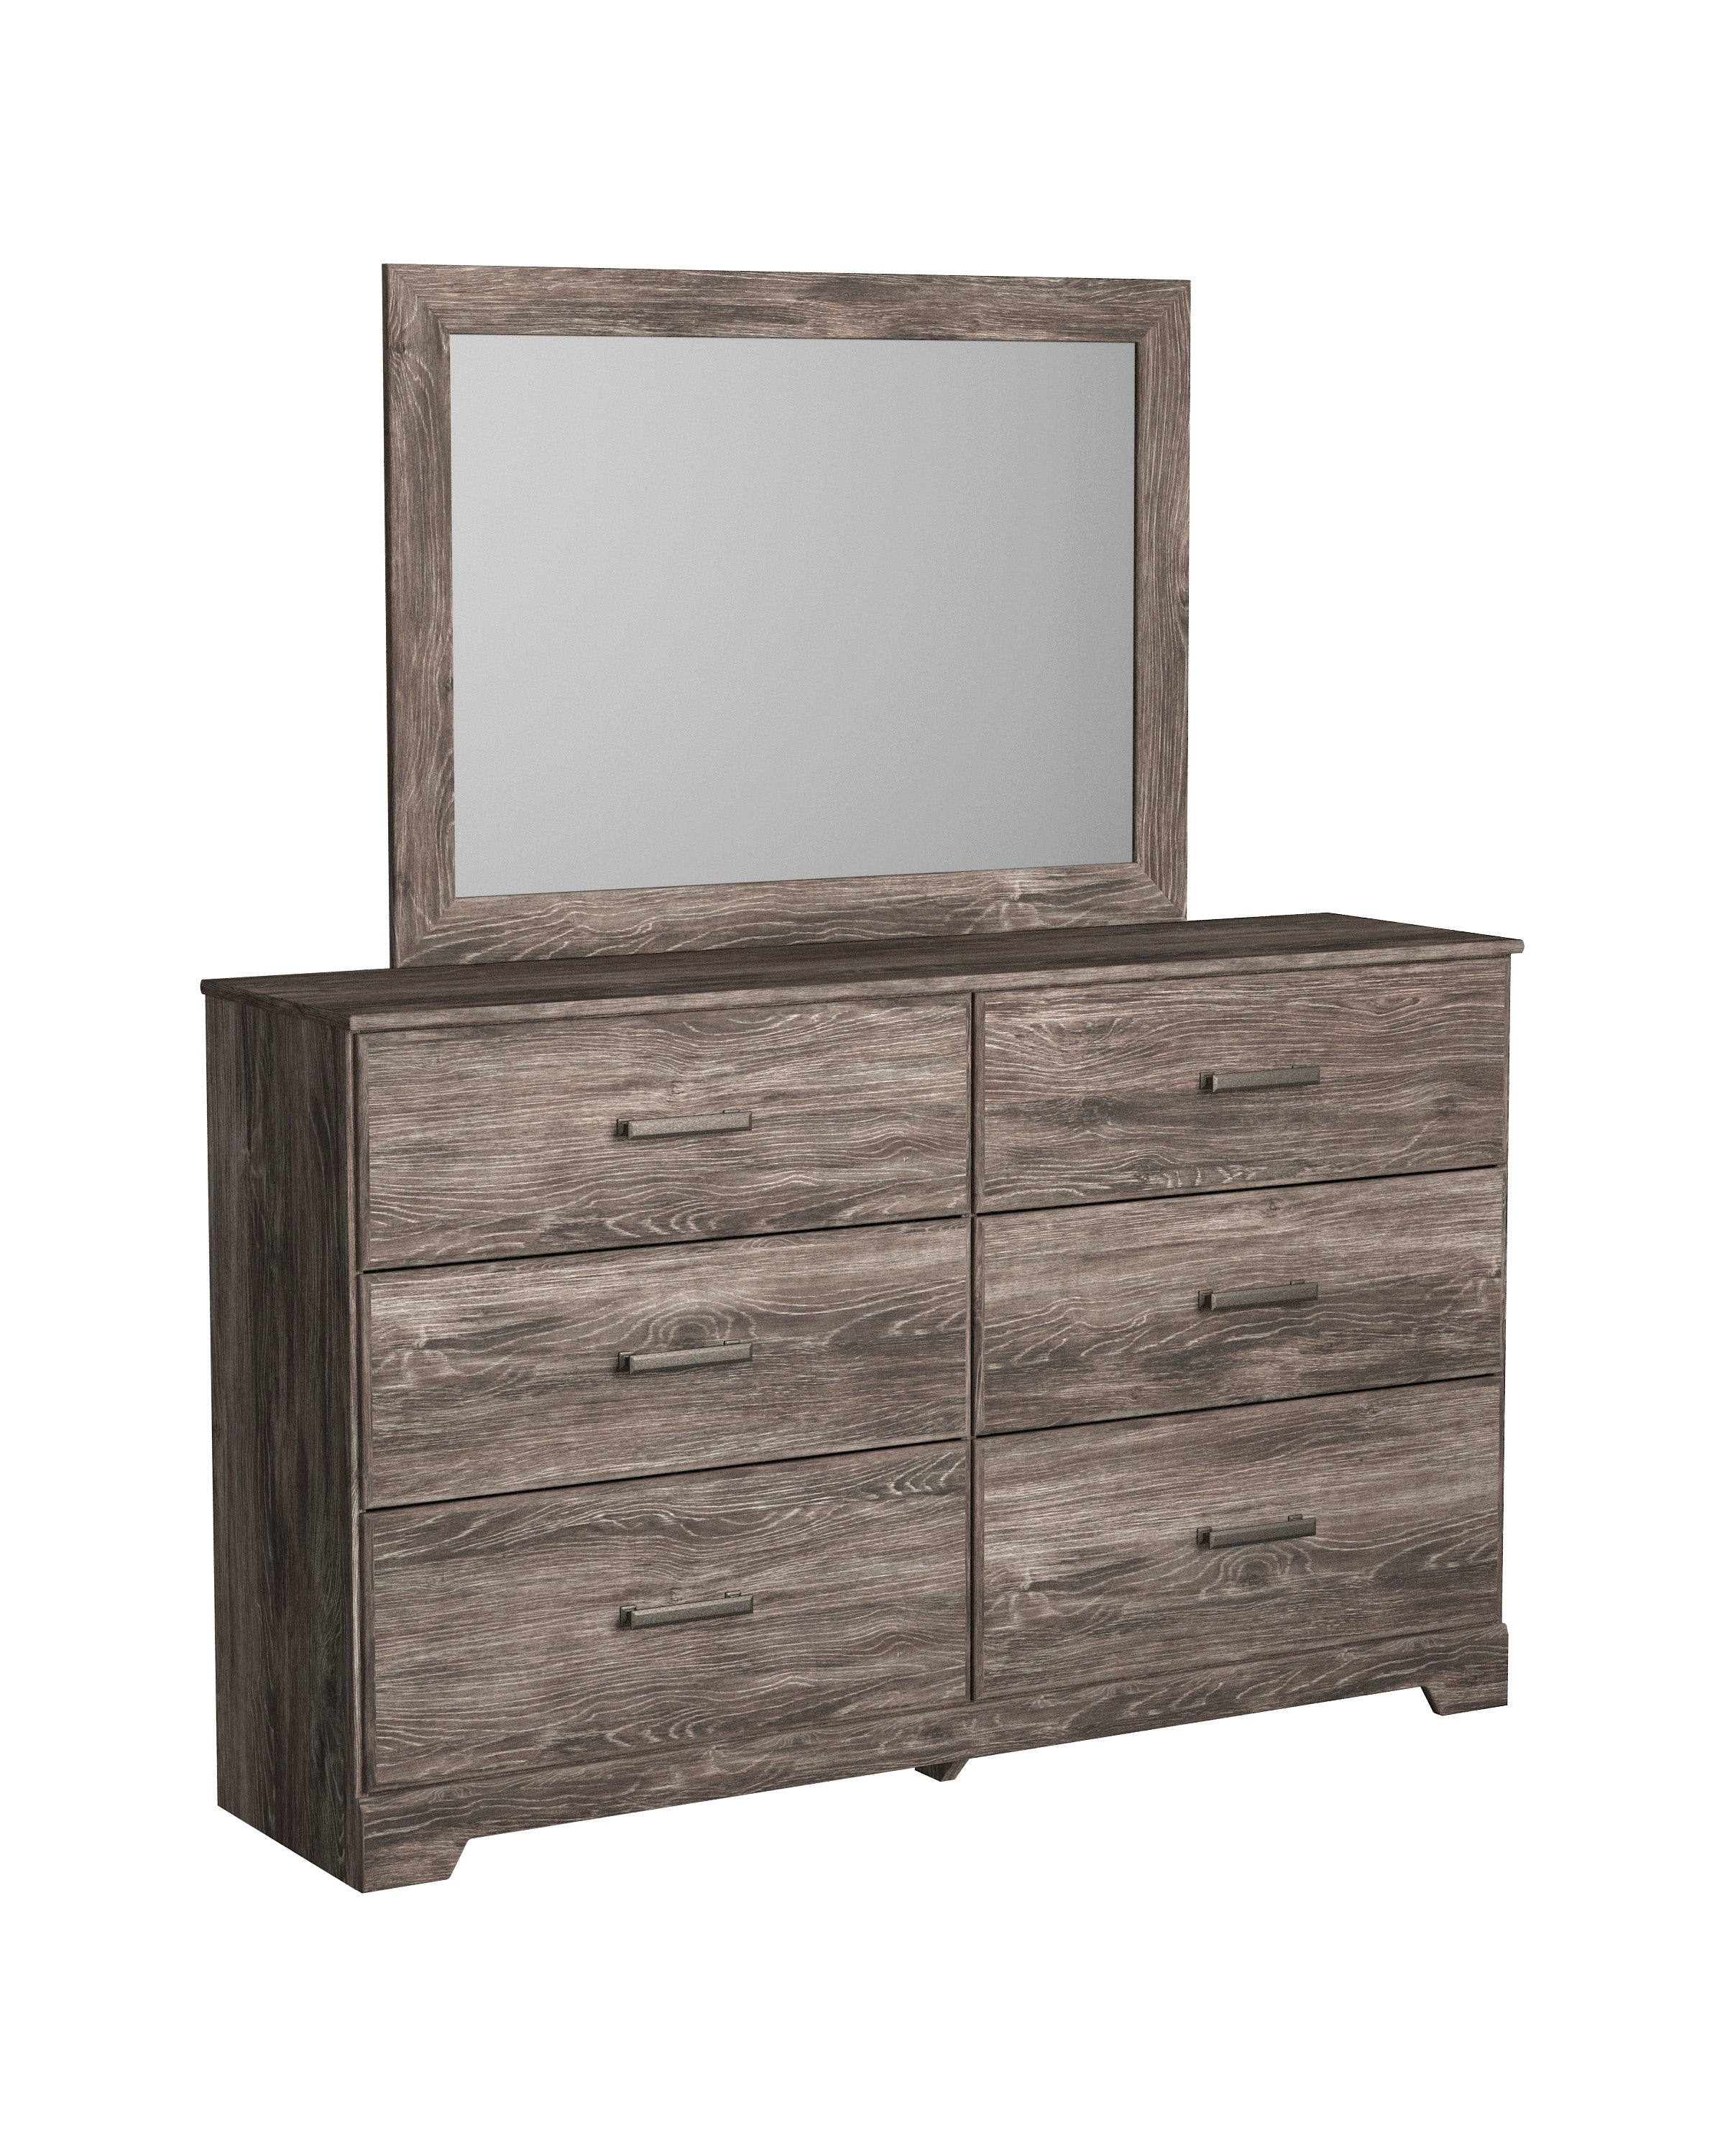 Ralinksi Full Panel Bed with Mirrored Dresser